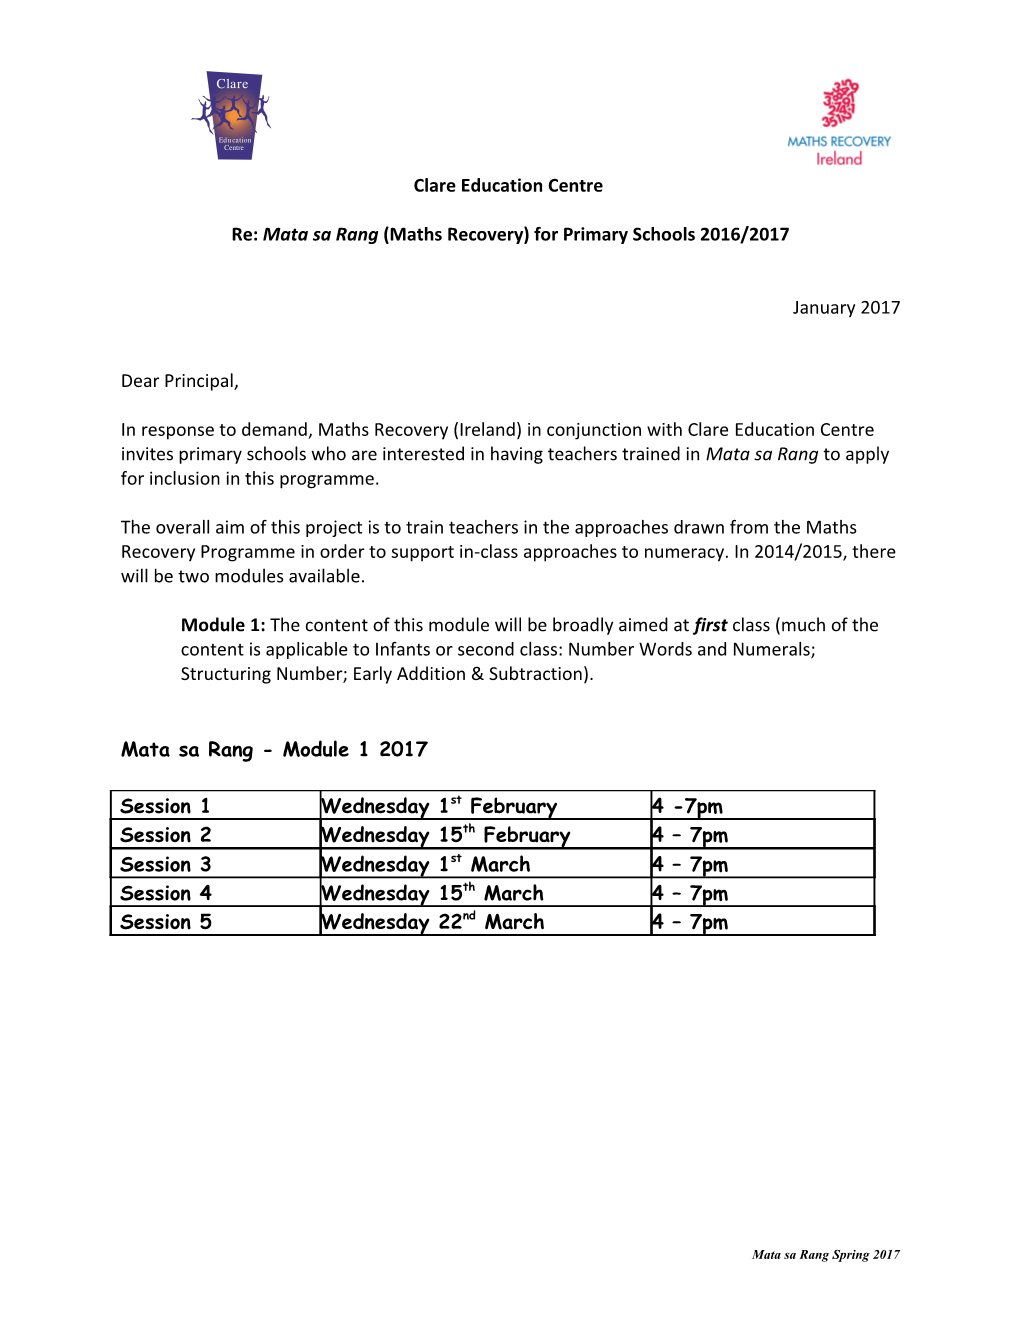 Re: Mata Sa Rang (Maths Recovery) for Primary Schools 2016/2017